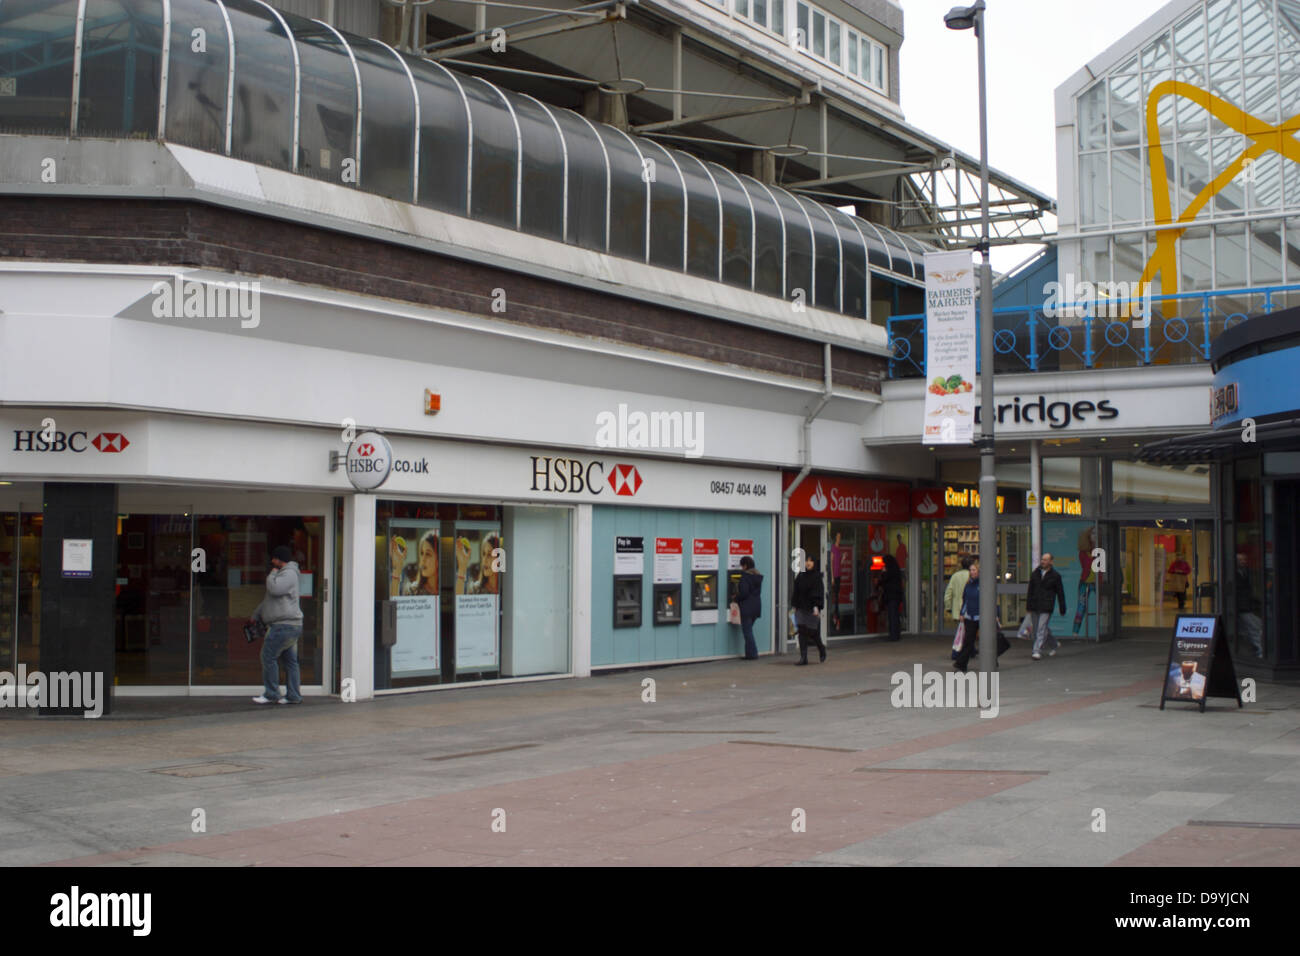 HSBC Bank, cash dispenser use, shoppers entering and leaving the bridges shopping center in Sunderland. Stock Photo